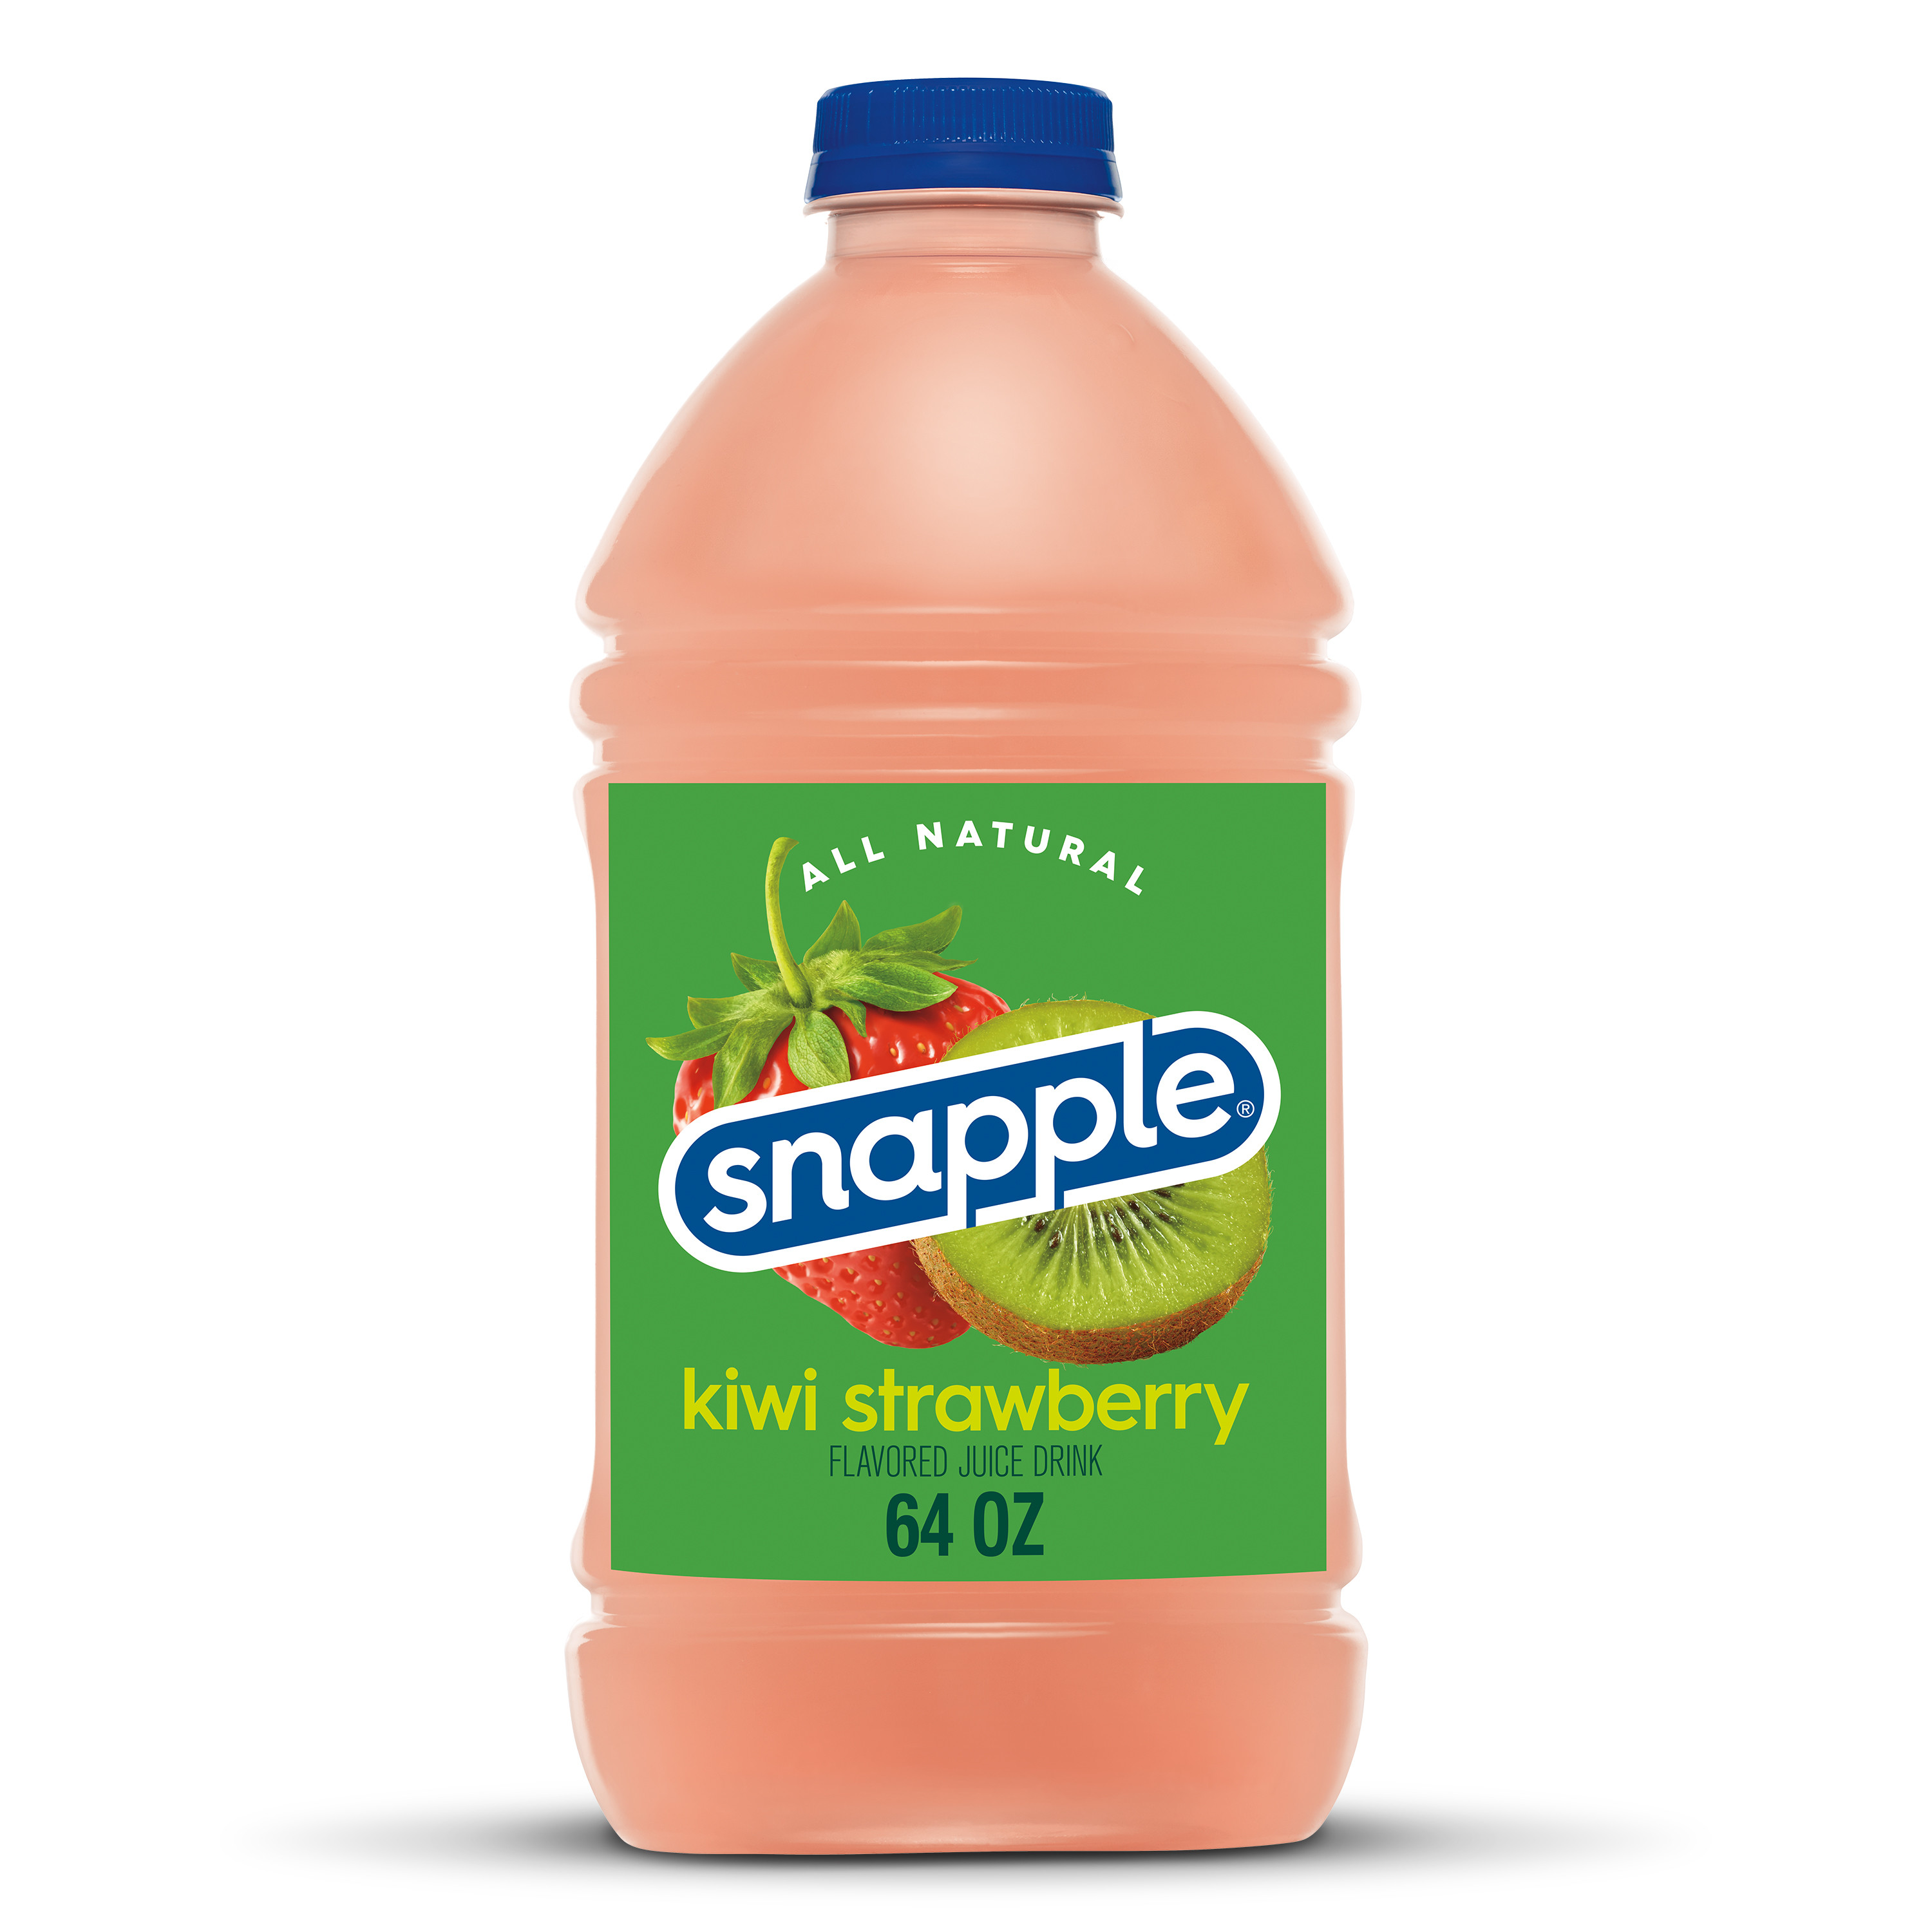 Snapple Kiwi Strawberry, 64 fl oz bottle - Walmart.com - Walmart.com